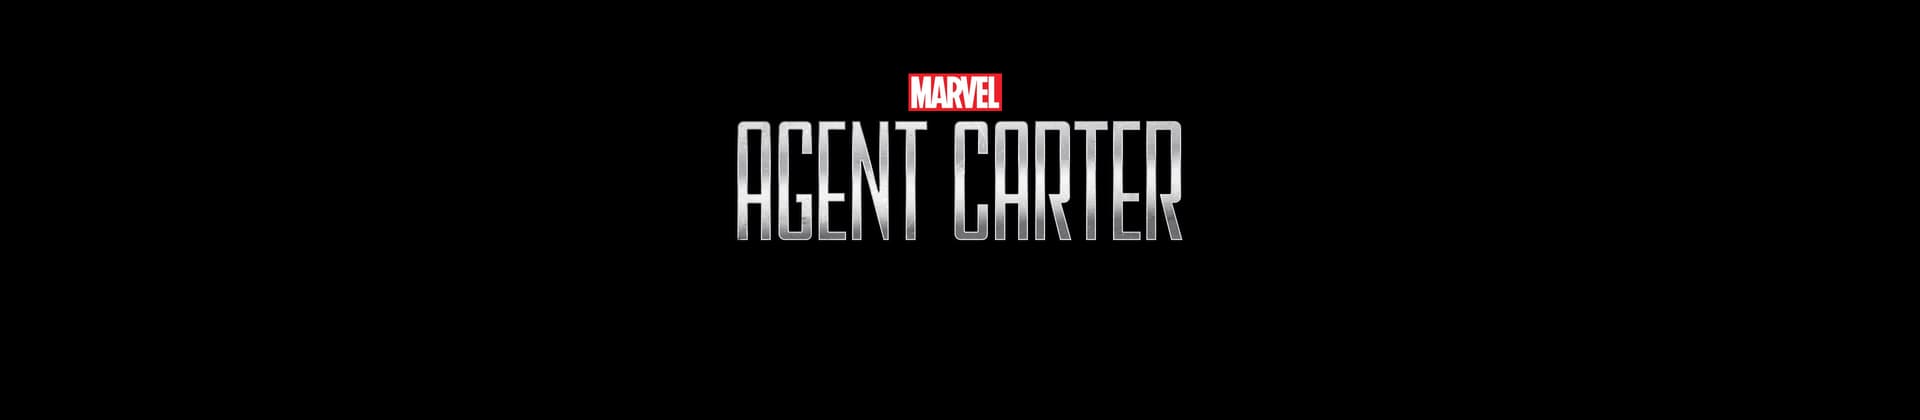 Marvel's Agent Carter TV Show Logo On Black